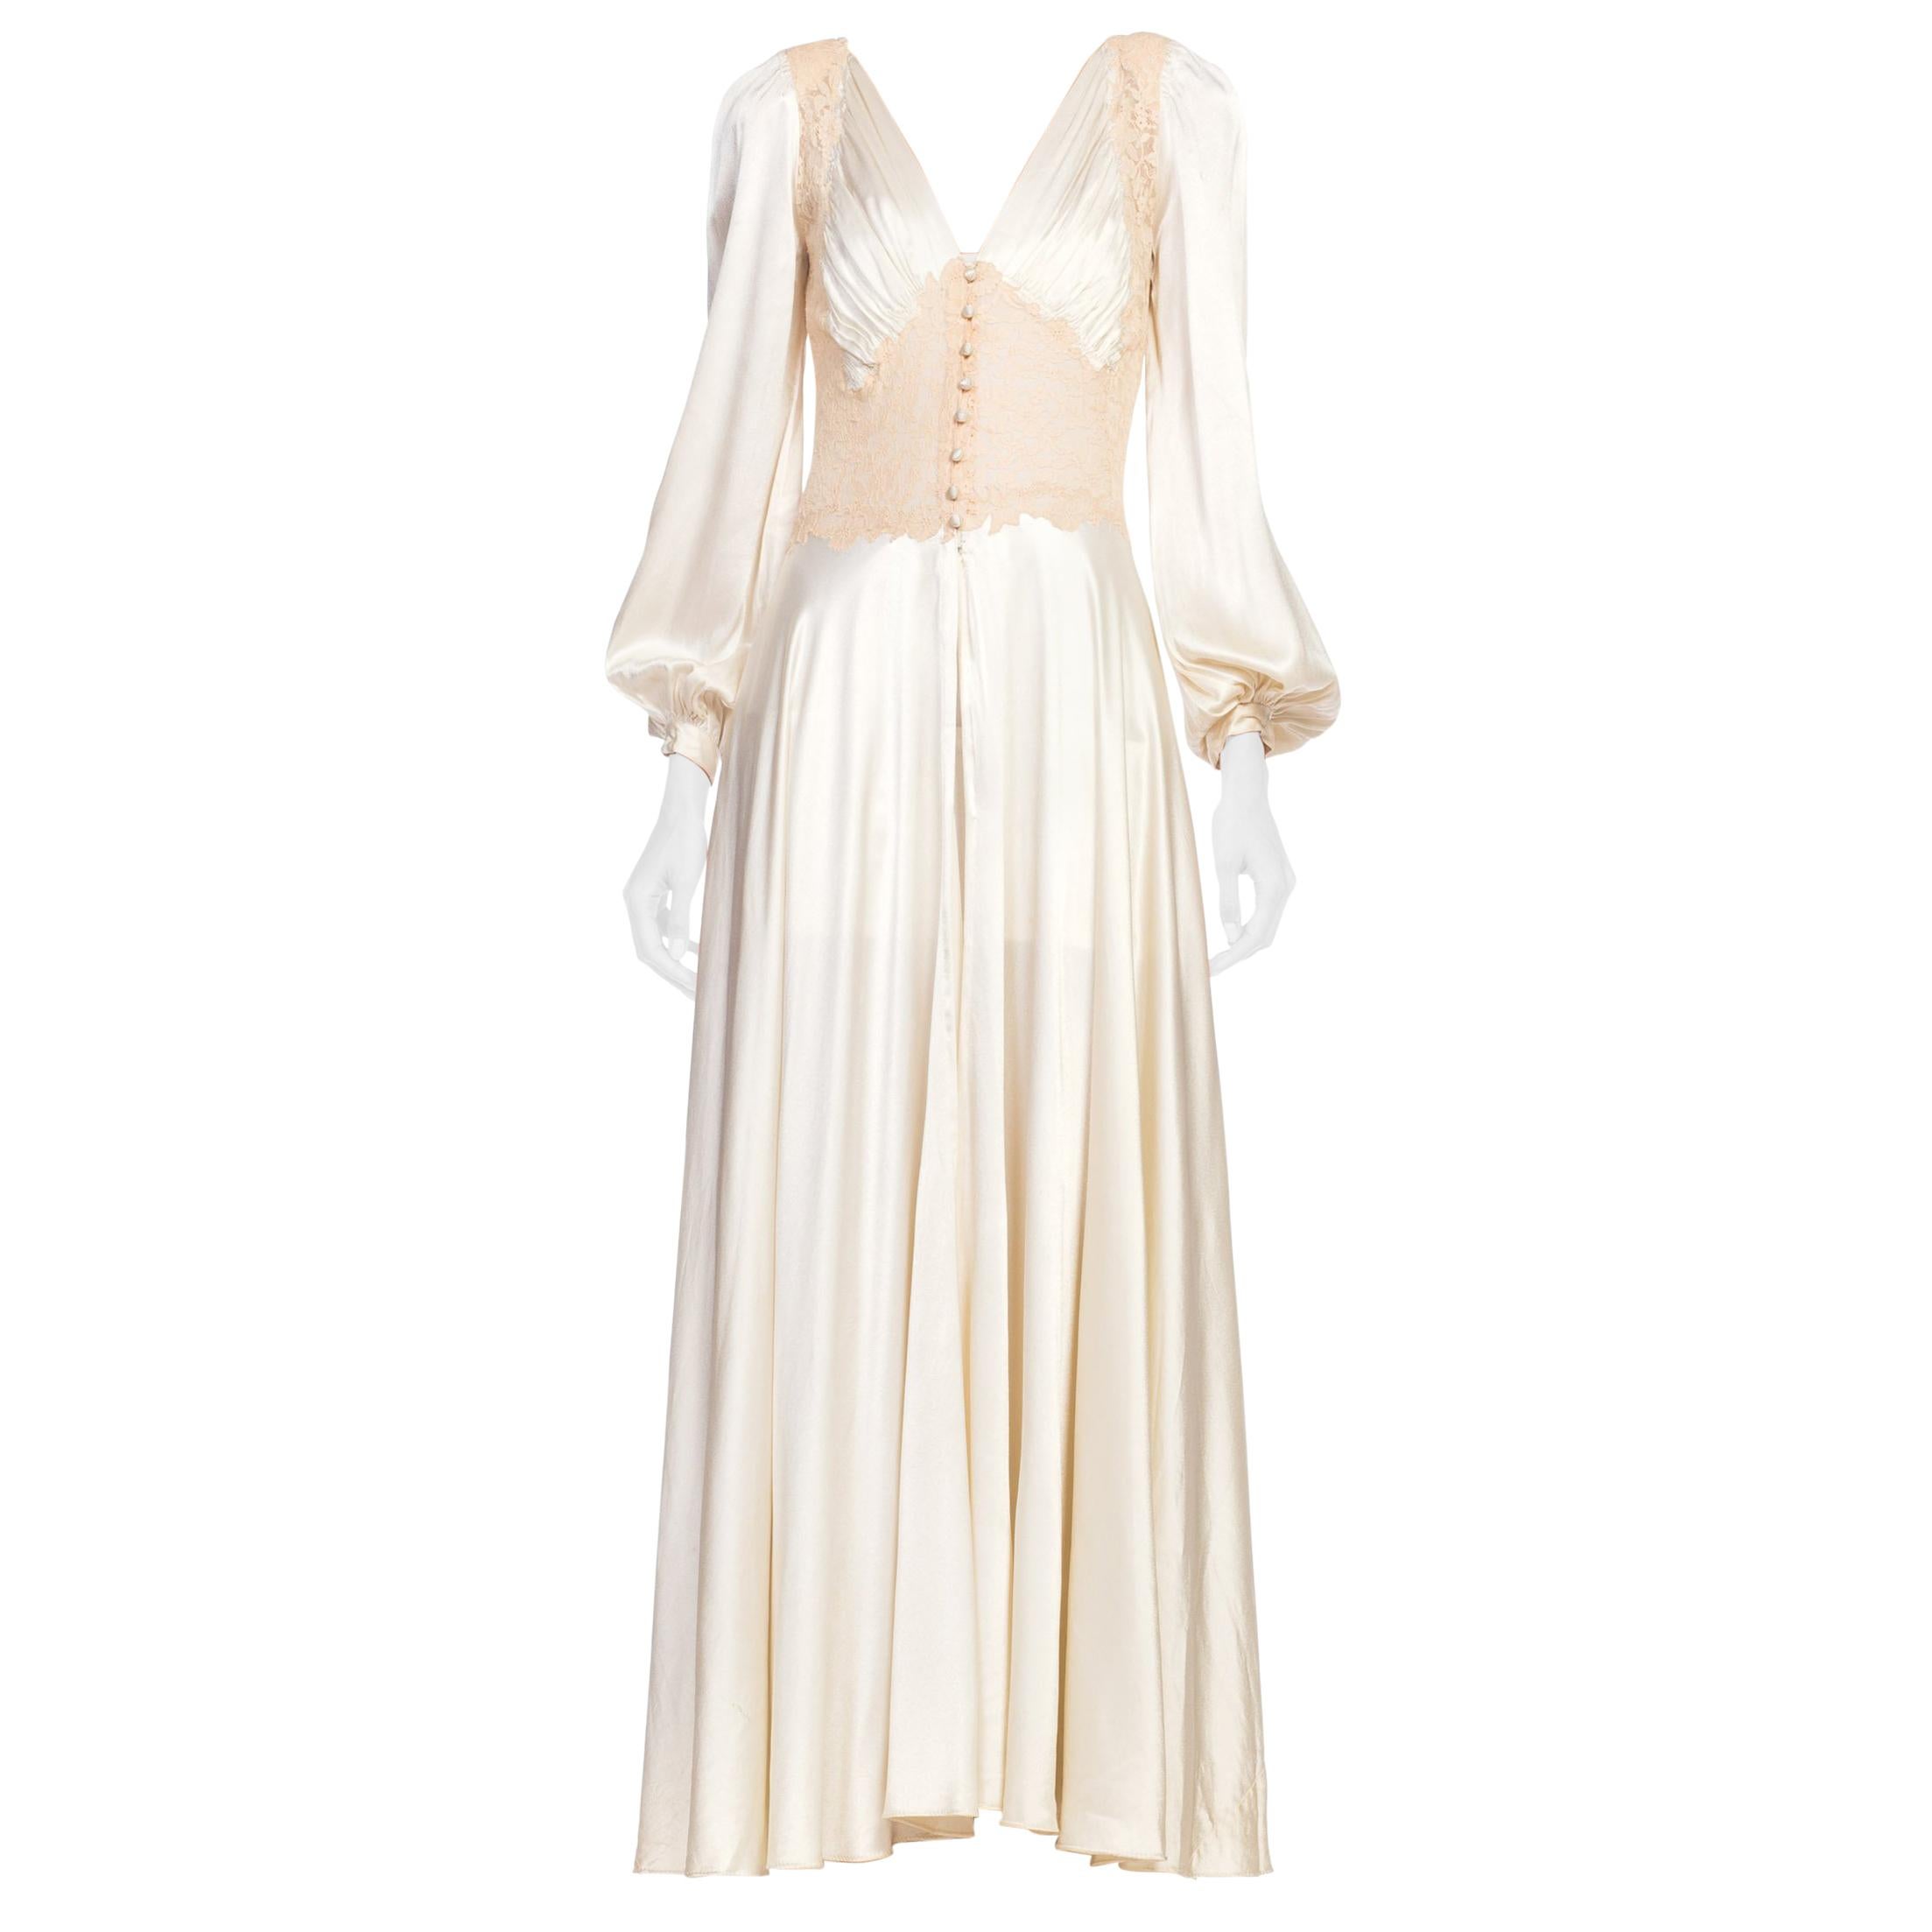 1930s 1940s Satin & Lace Negligee Slip Dress Robe 